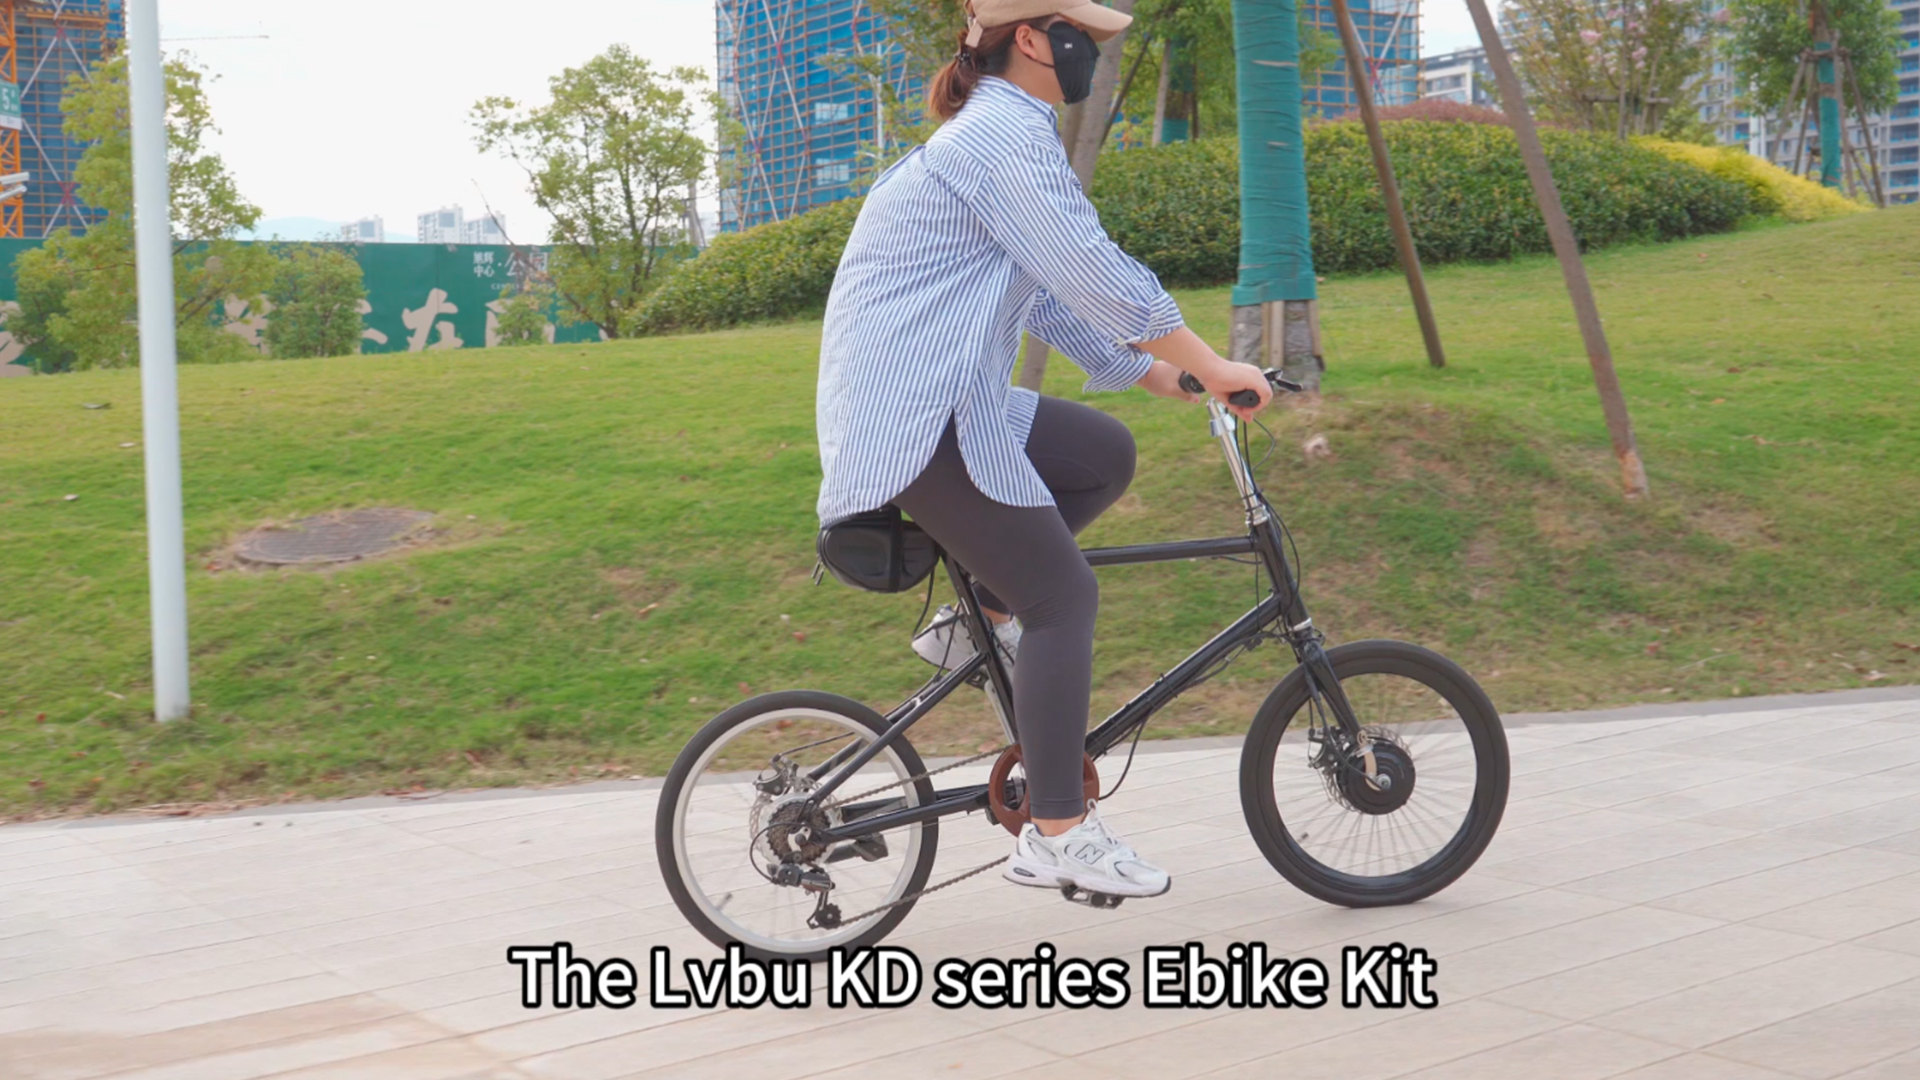 The Lvbu KD series Ebike Kit brings you a healtheir life.